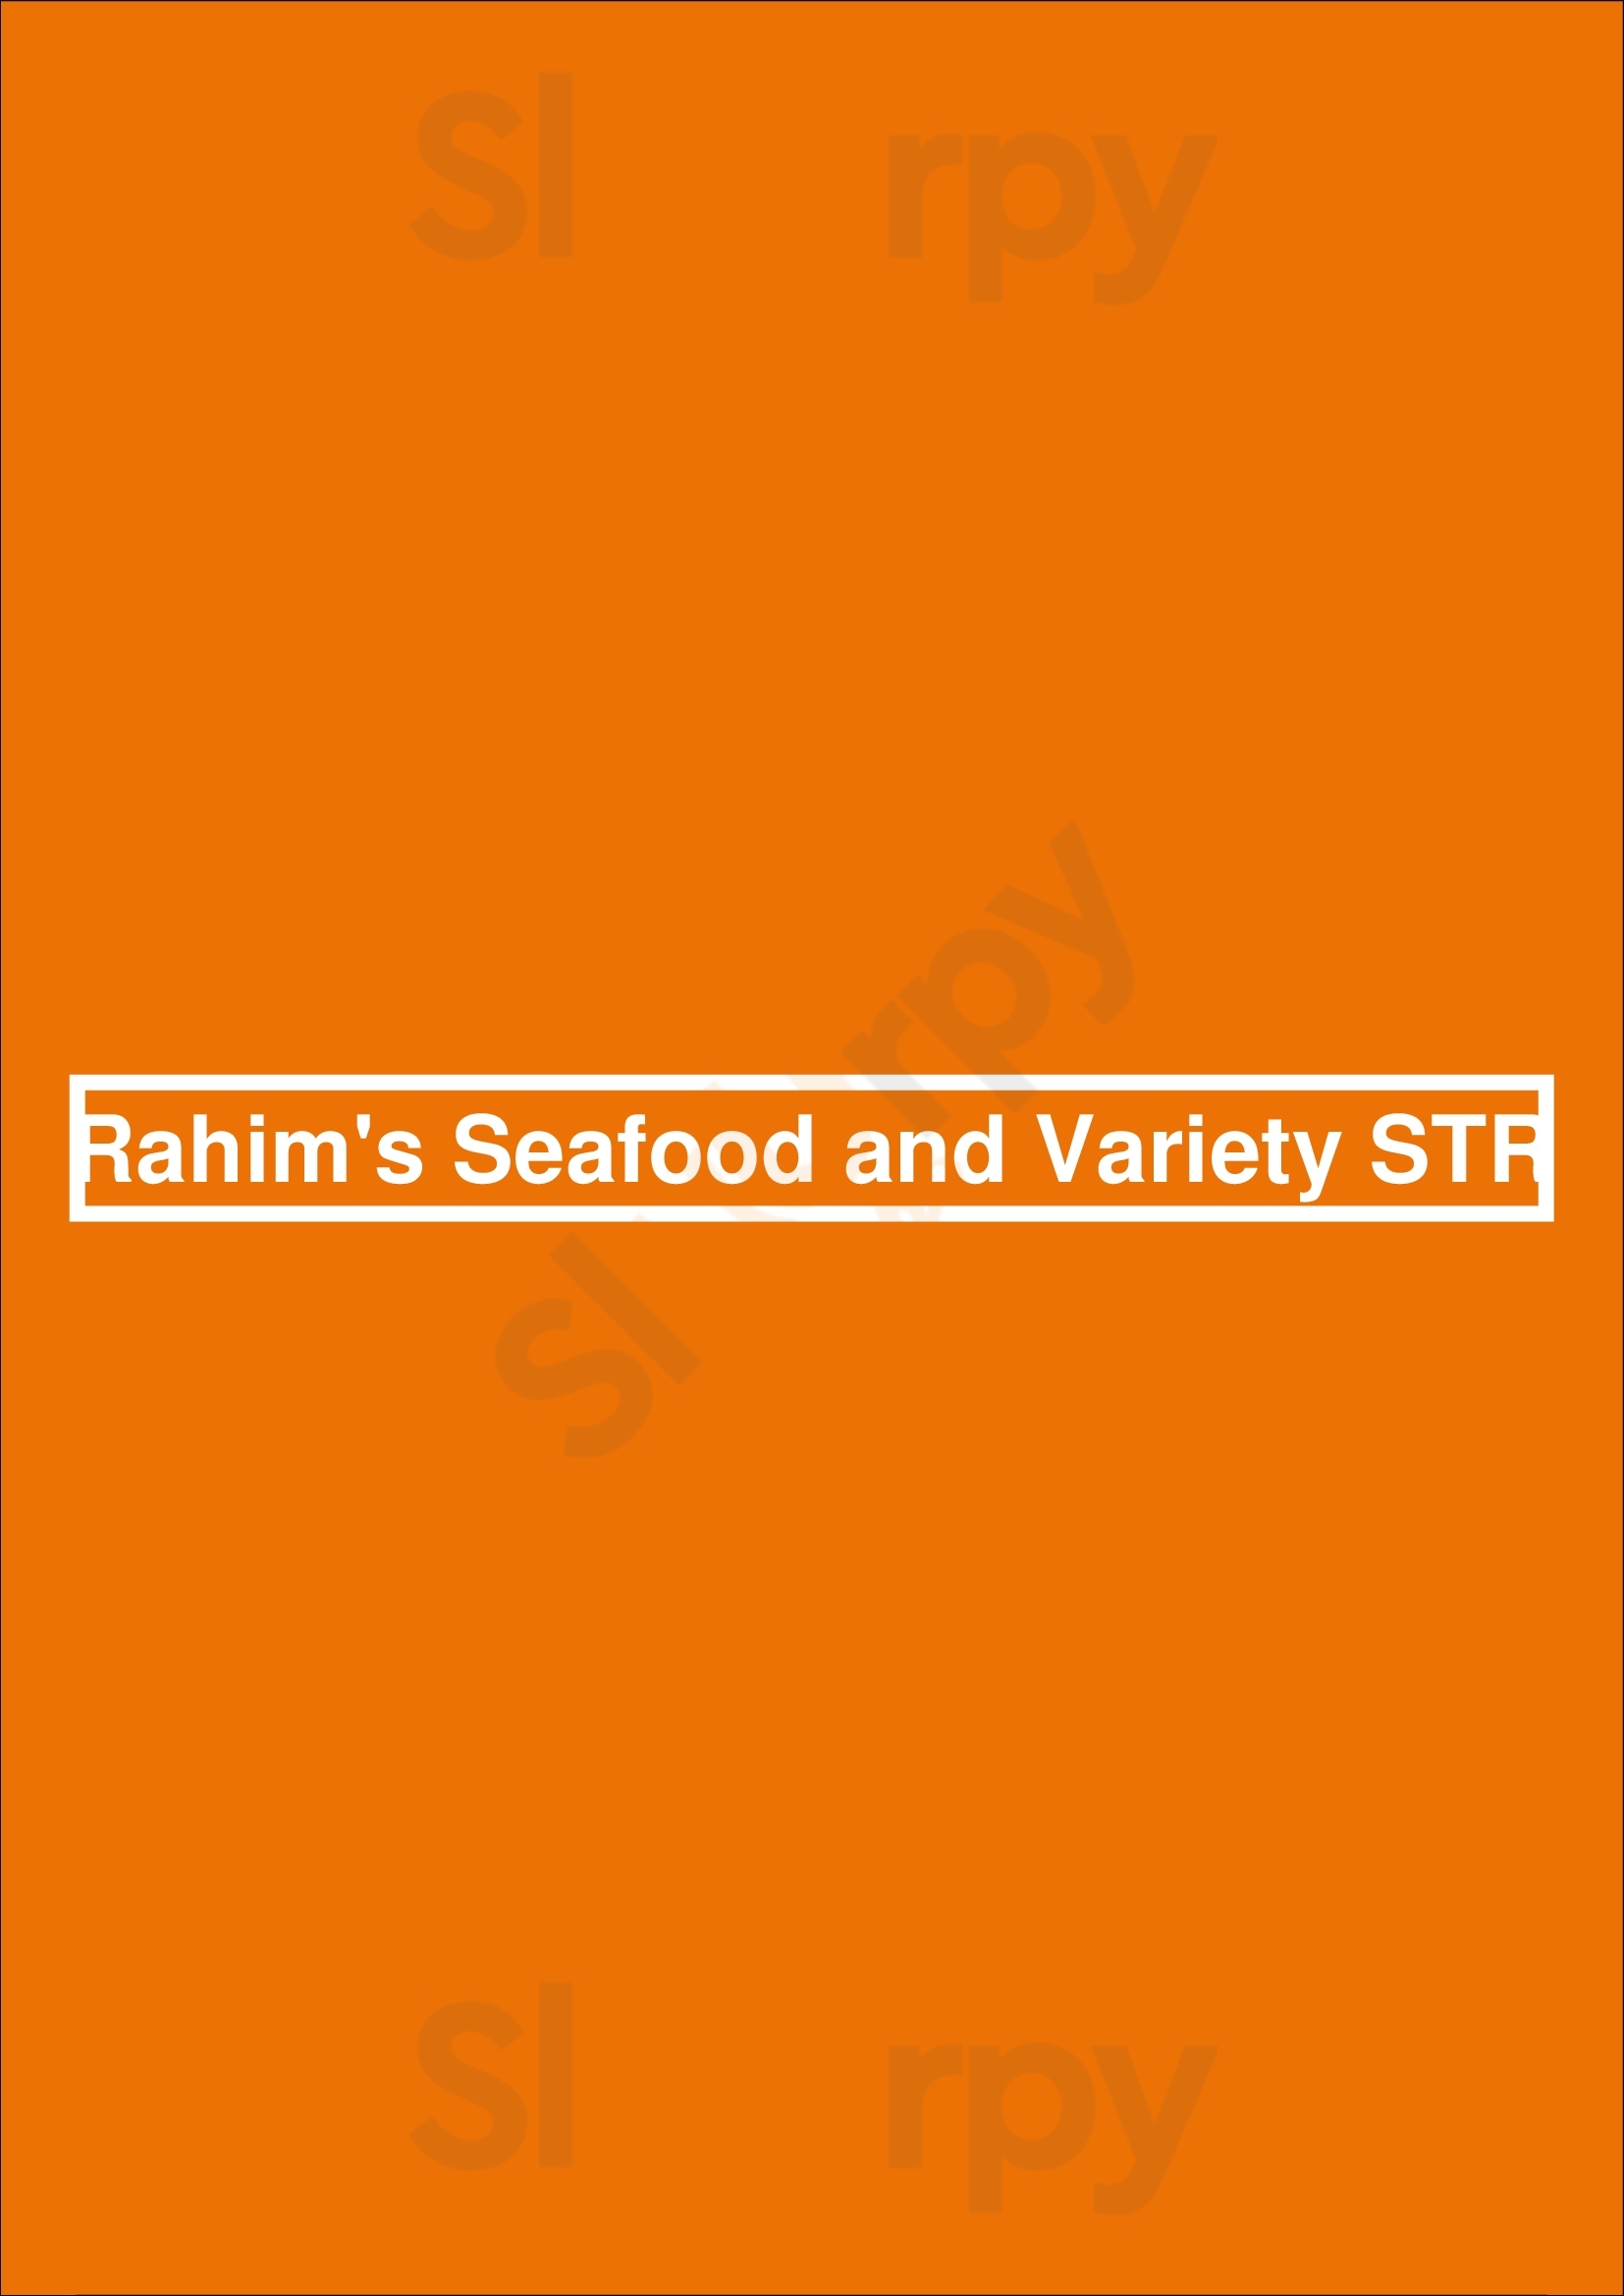 Rahim's Seafood And Variety Str Atlanta Menu - 1